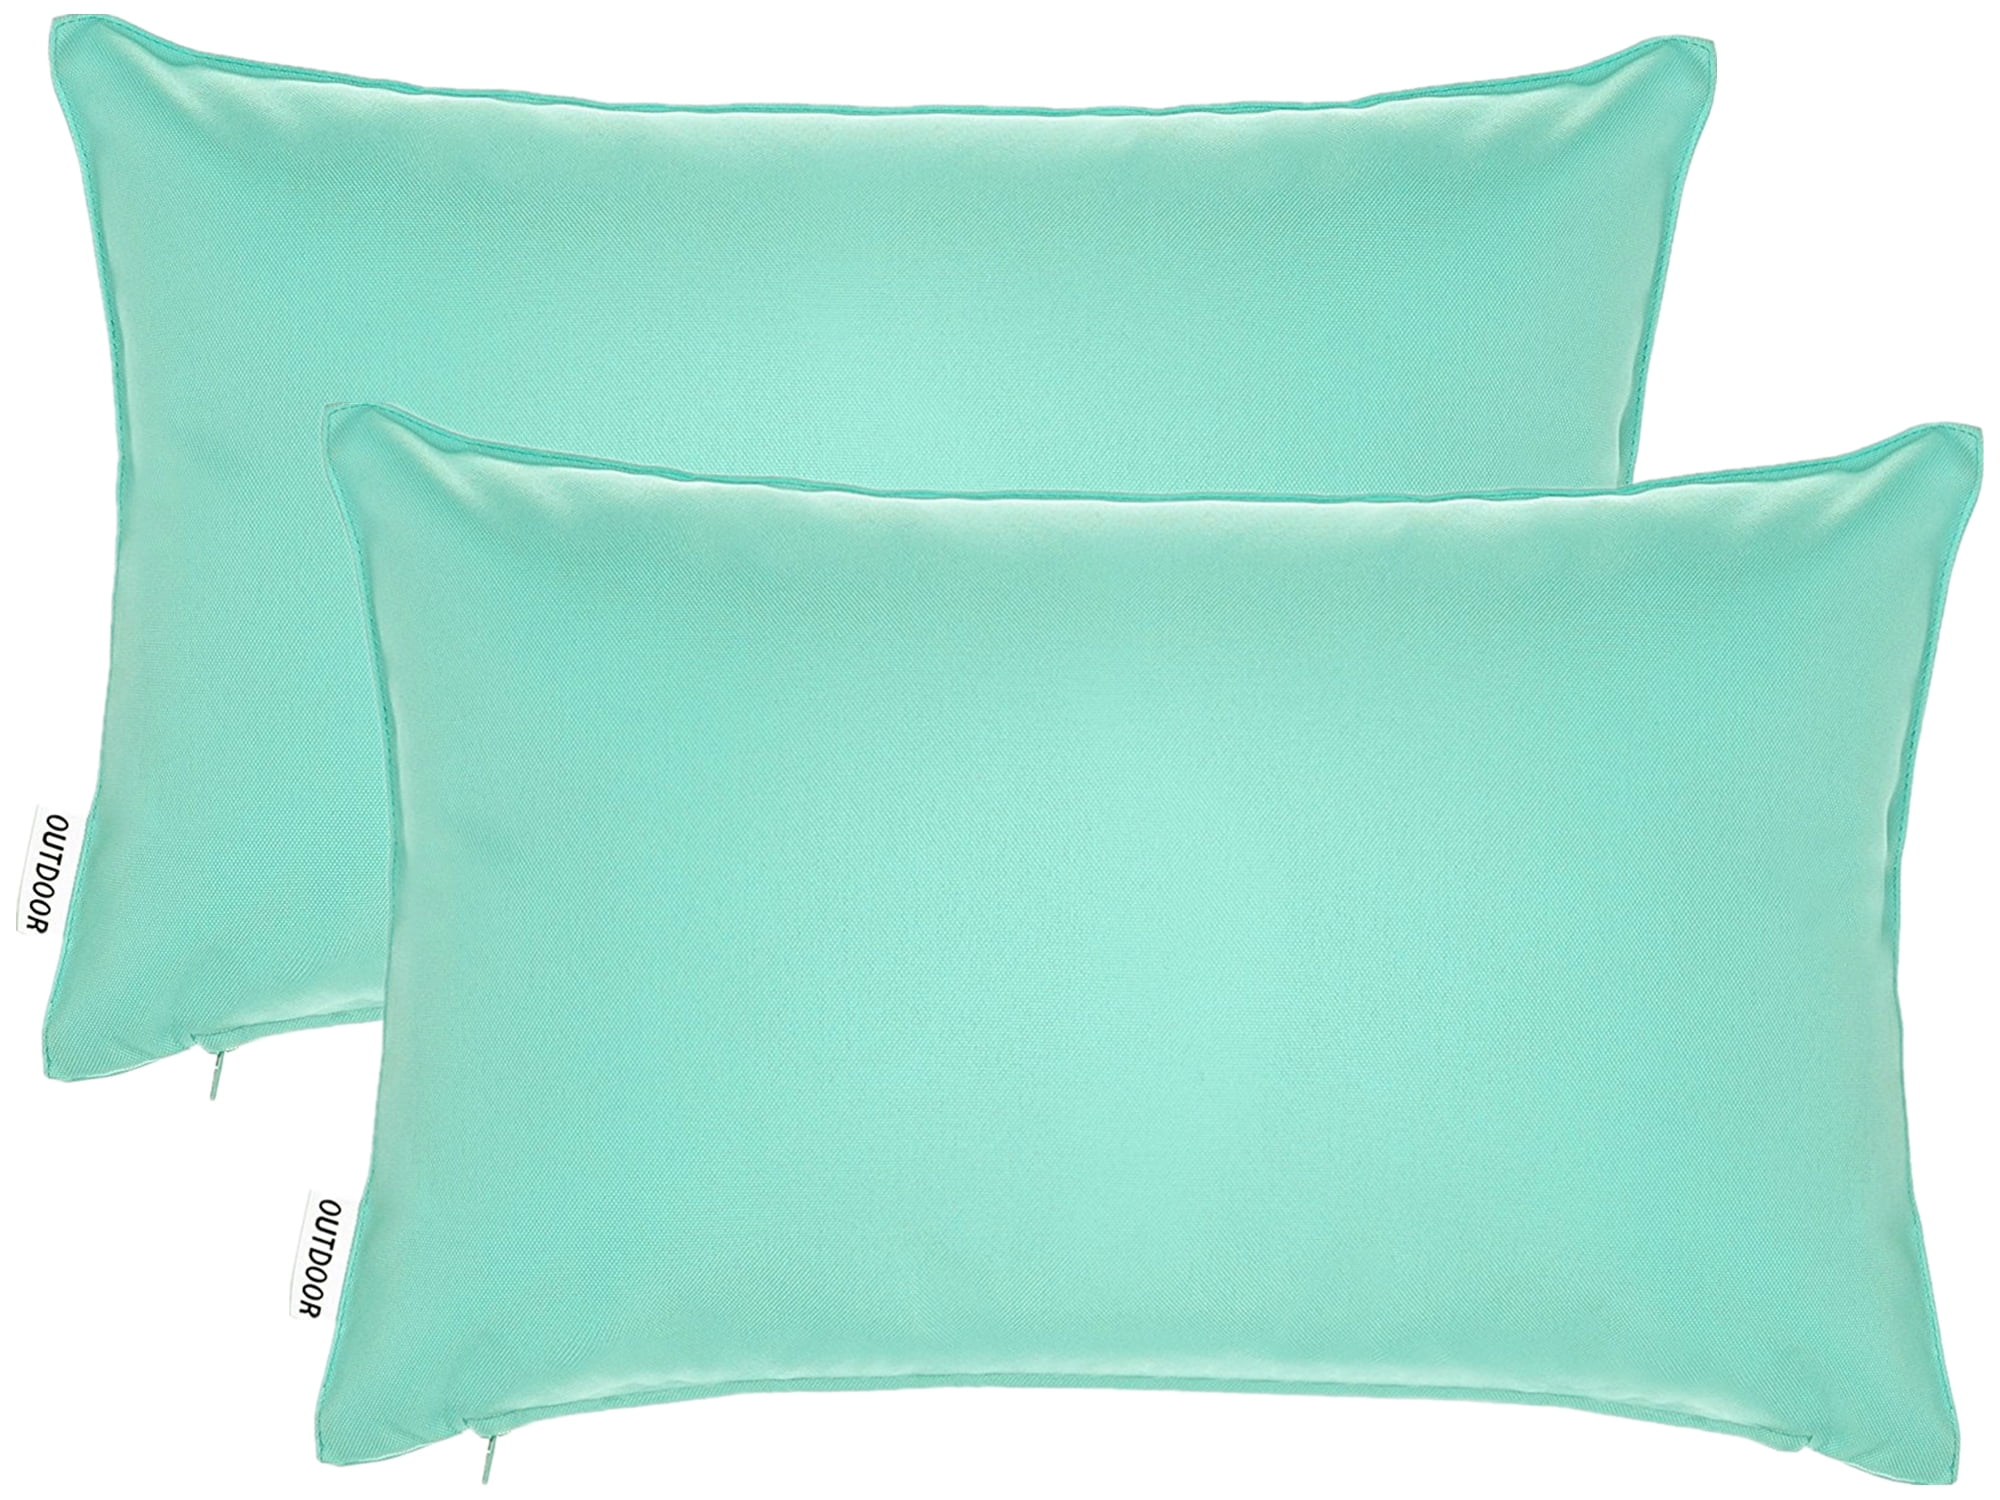 Personalized Pillow Outdoor Pillow Blue Lumbar Pillow Decorative Pillow Case Pillows 12*24 Inches Decor Pillows Throw Pillow Cover